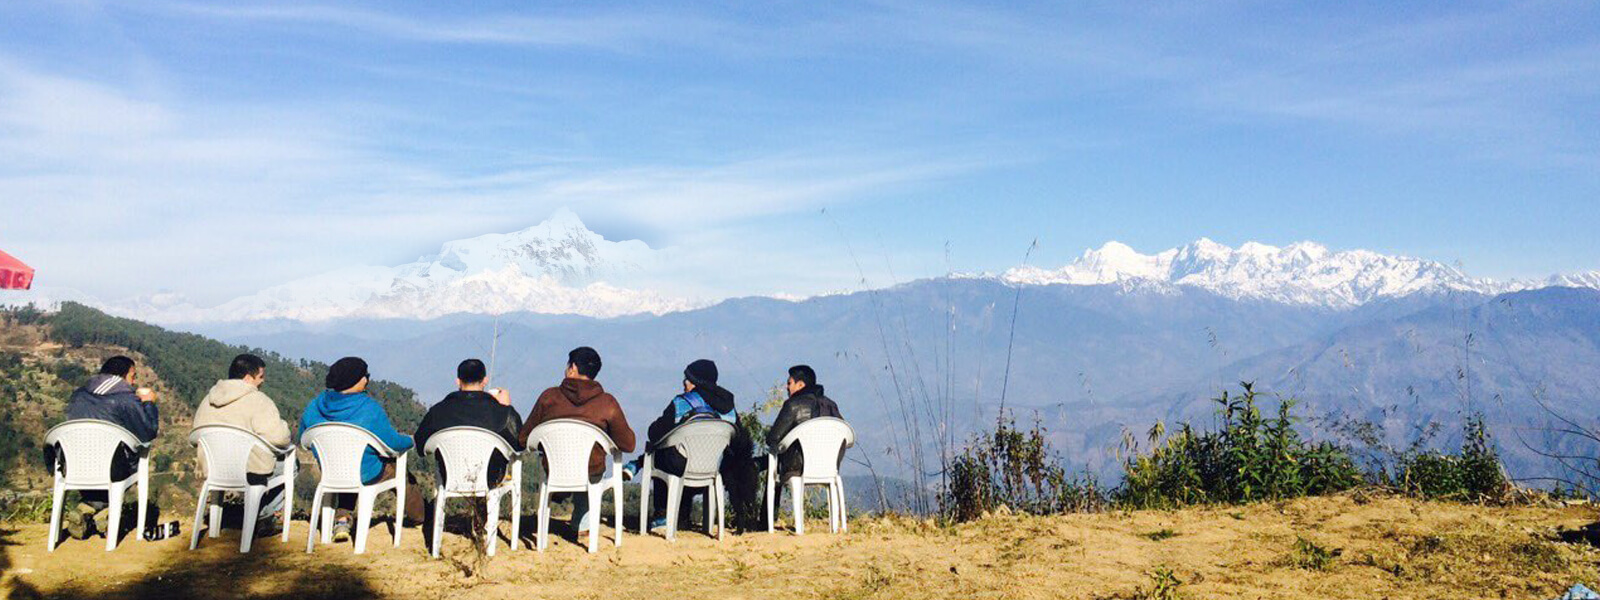 Kakani is one of the scenic picnic spots around kathmandu